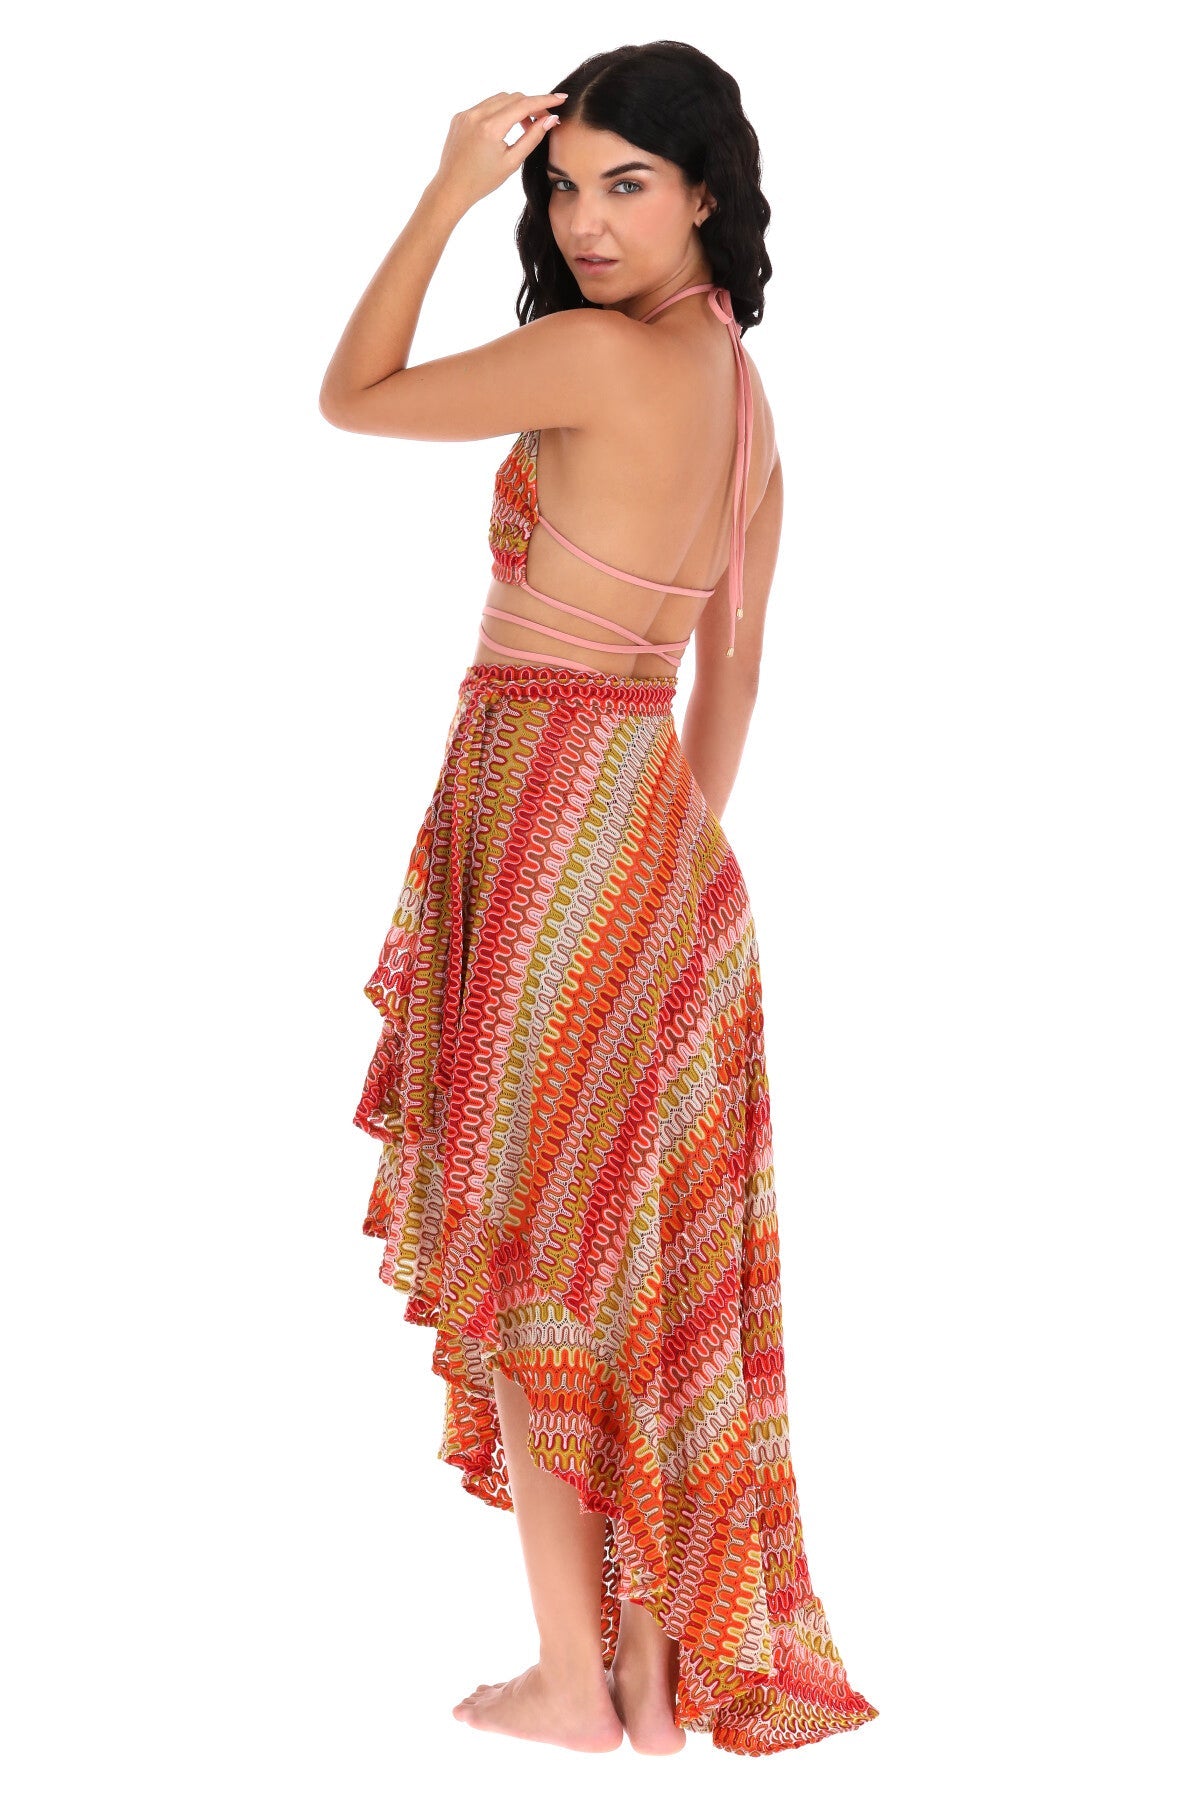 Saladita Skirt in Agava by Sanlier